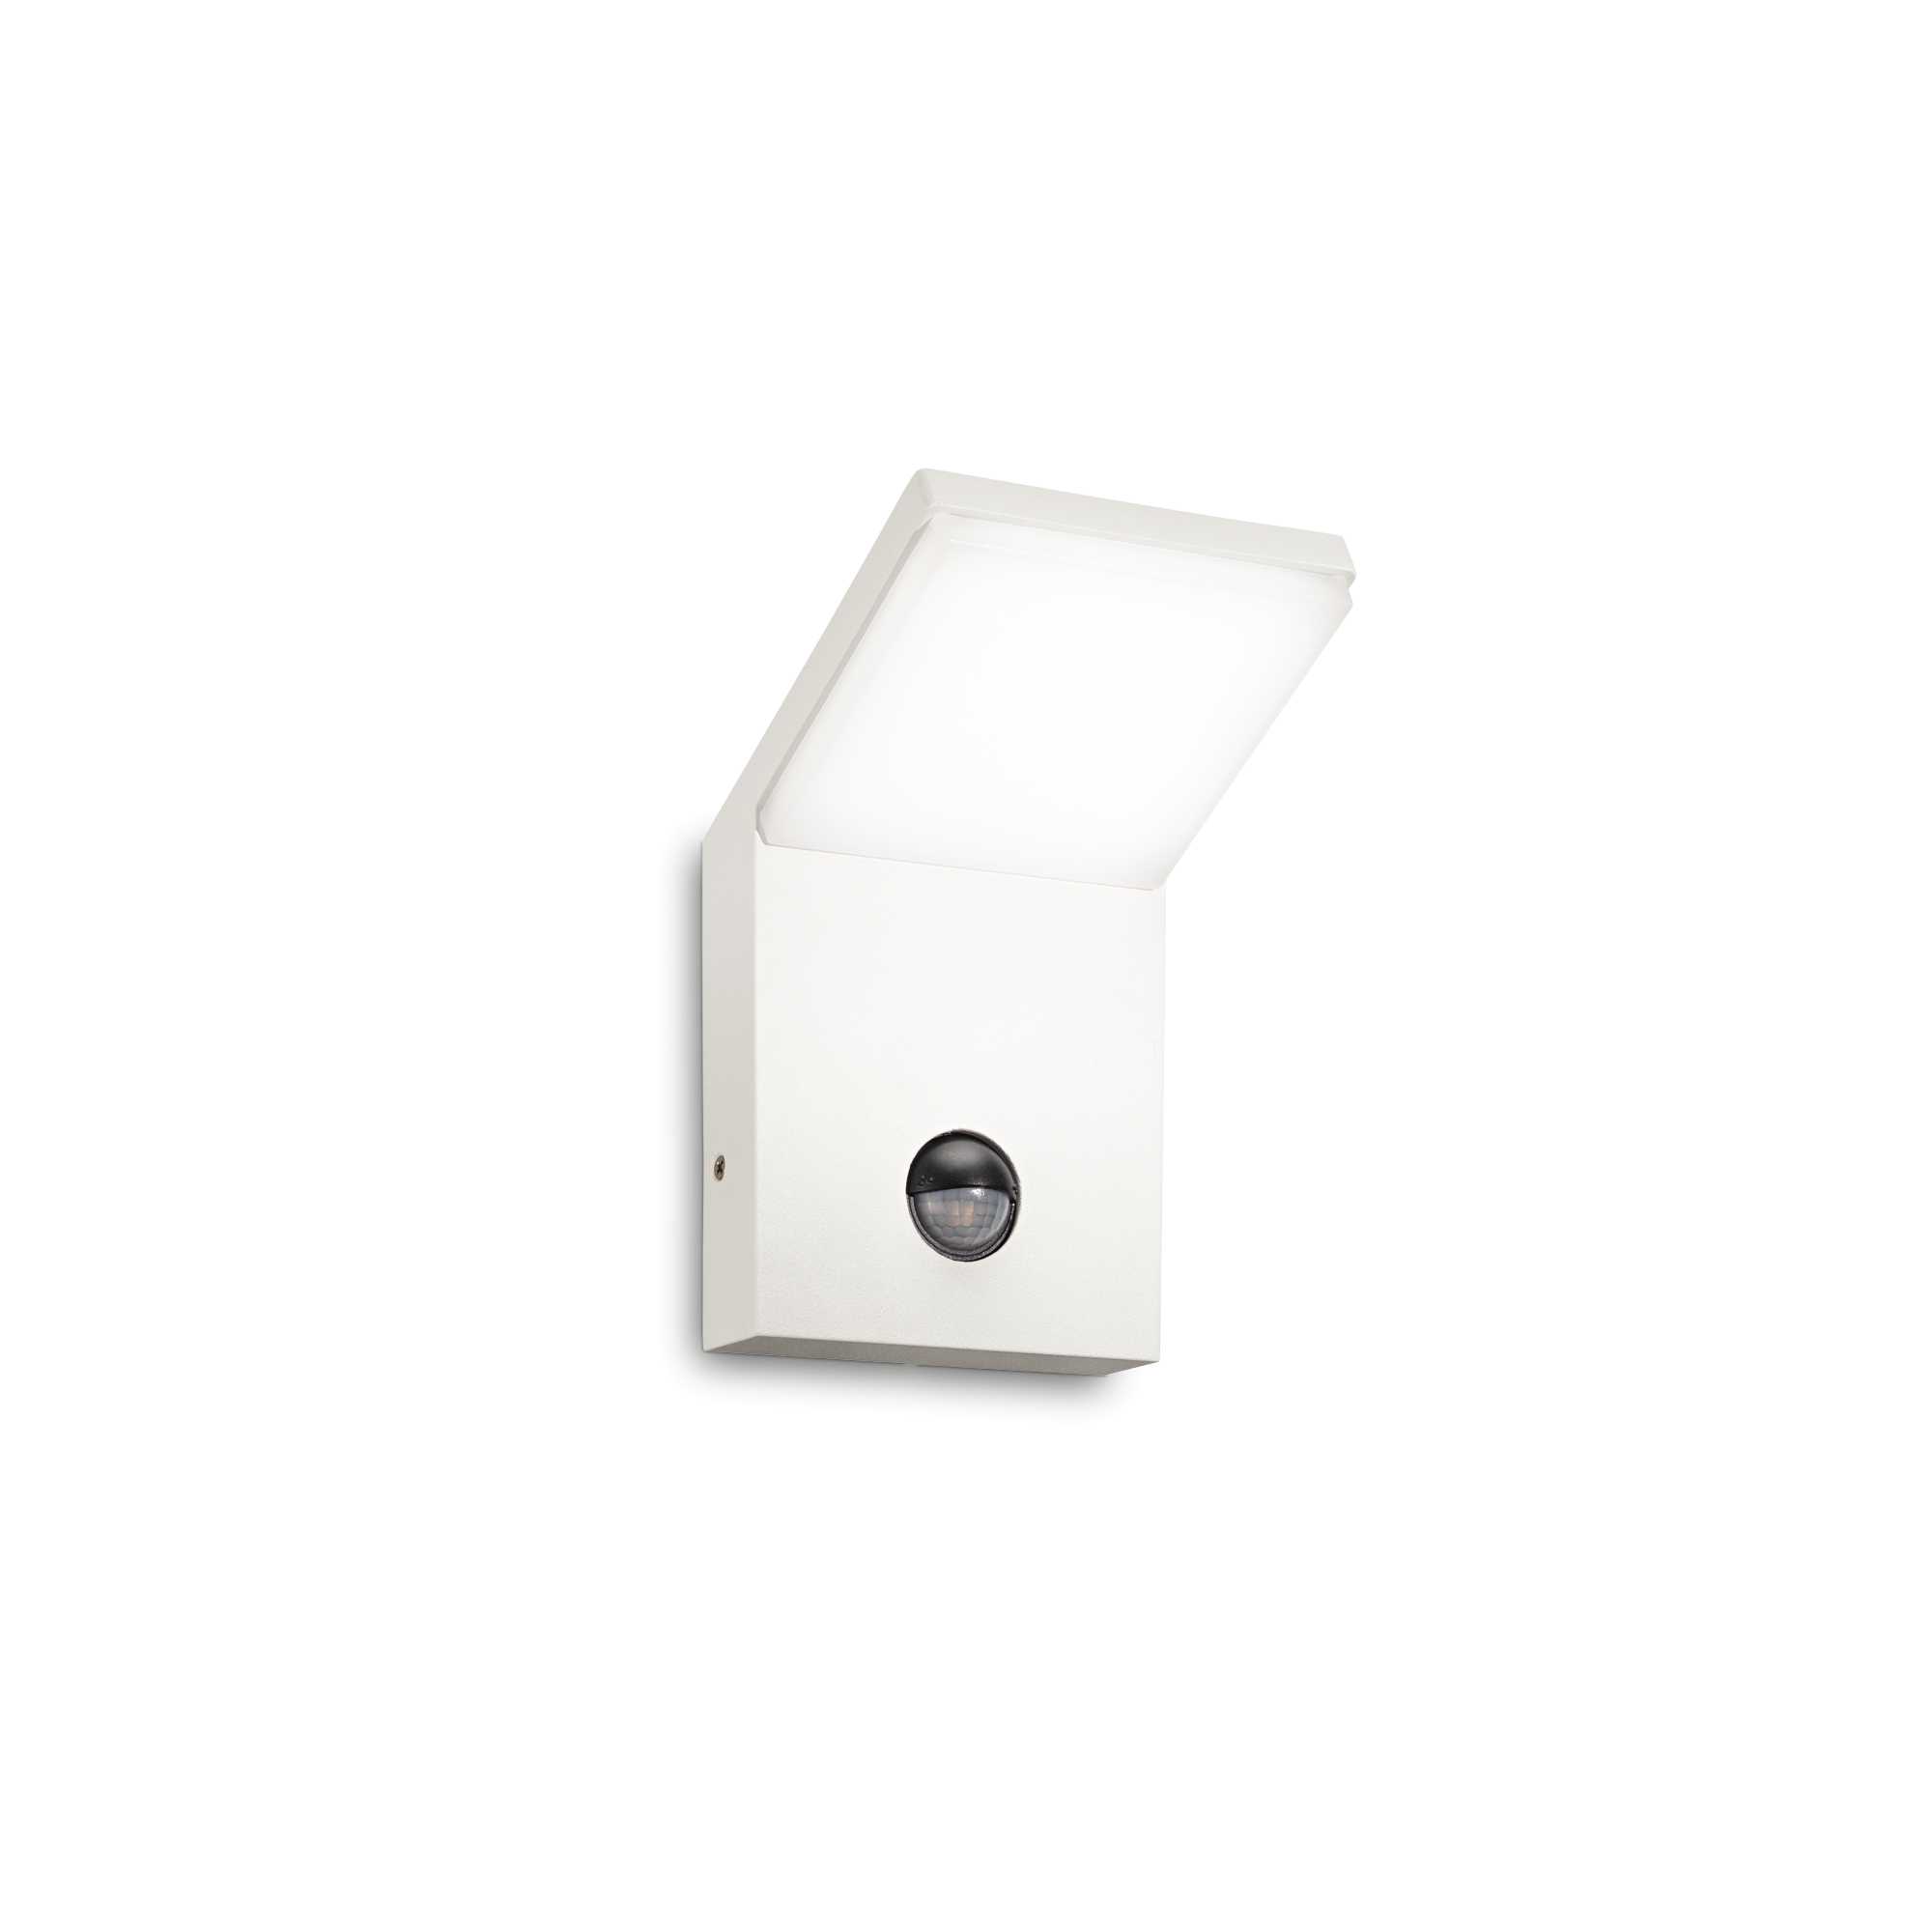 AD hotelska oprema Vanjska zidna lampa Style ap senzor (4000k)- Bijele boje slika proizvoda